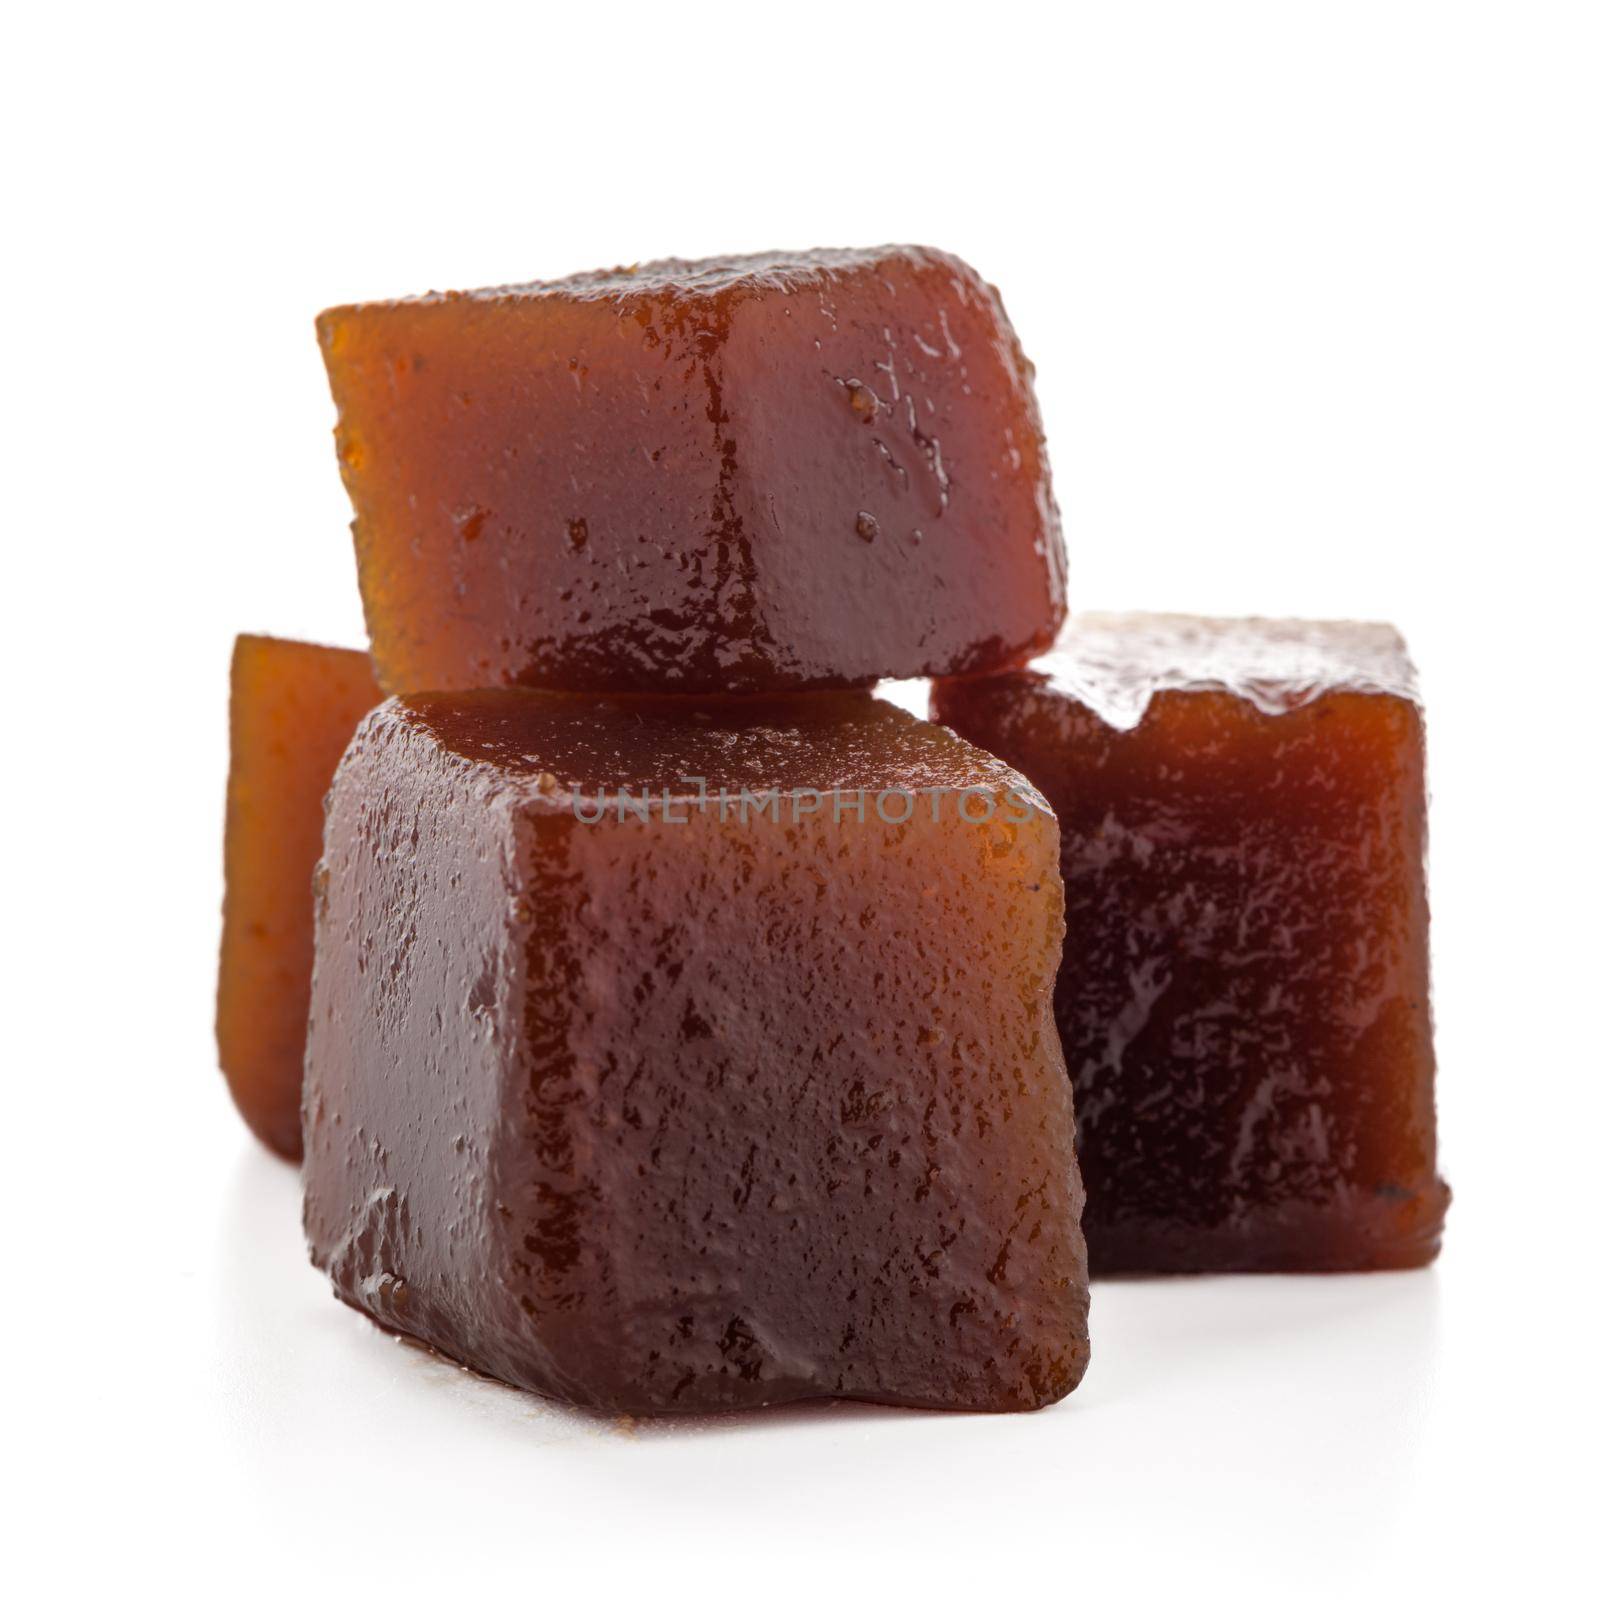 Marmalade cubes isolated on white background.